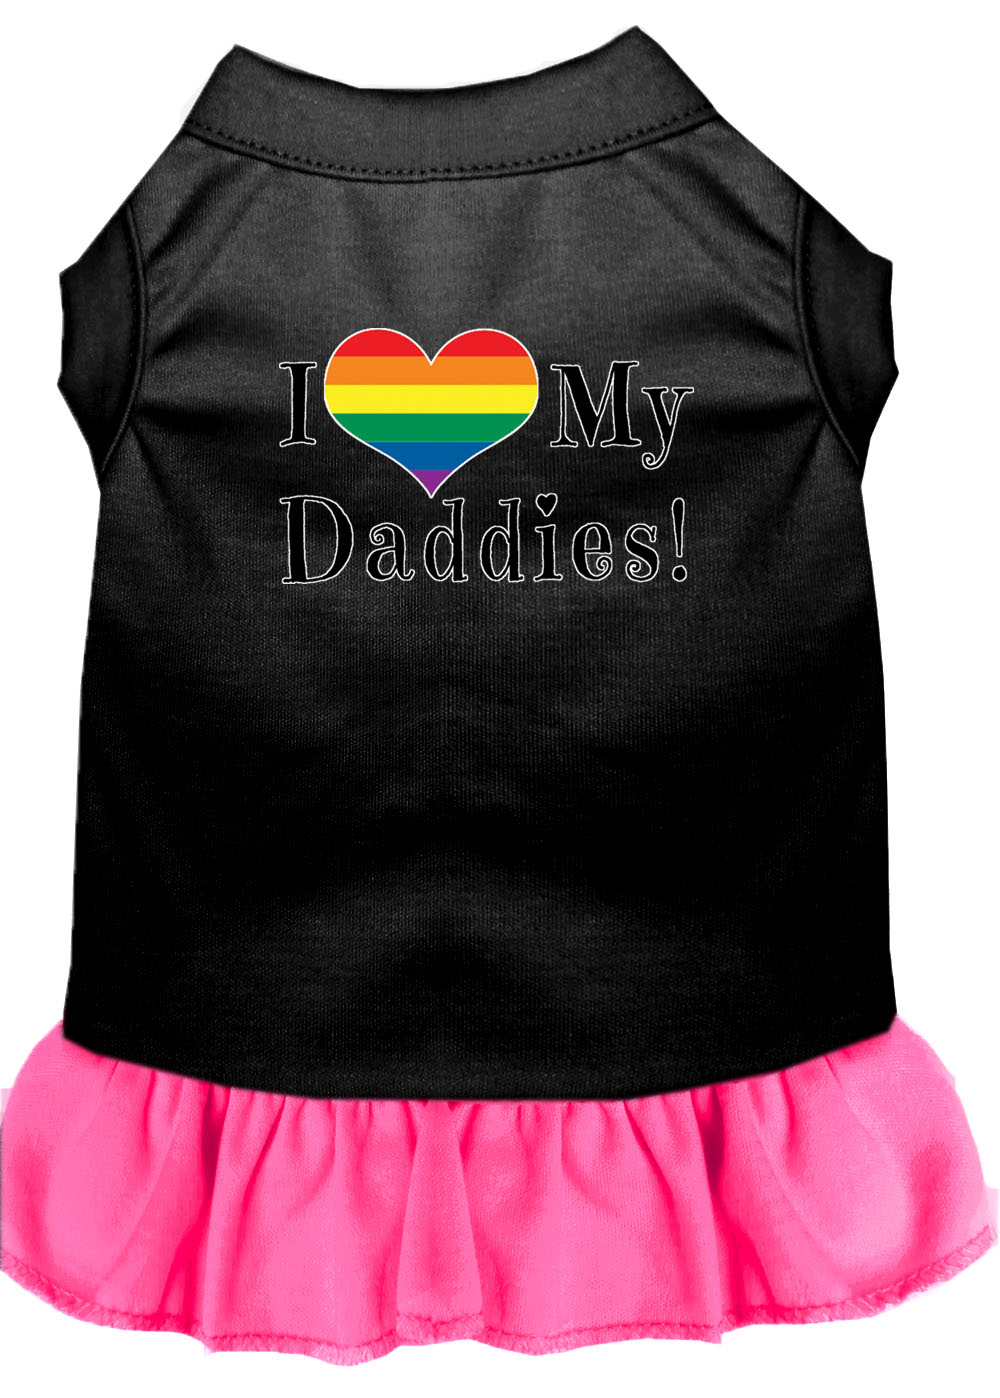 I Heart my Daddies Screen Print Dog Dress Black with Bright Pink Lg